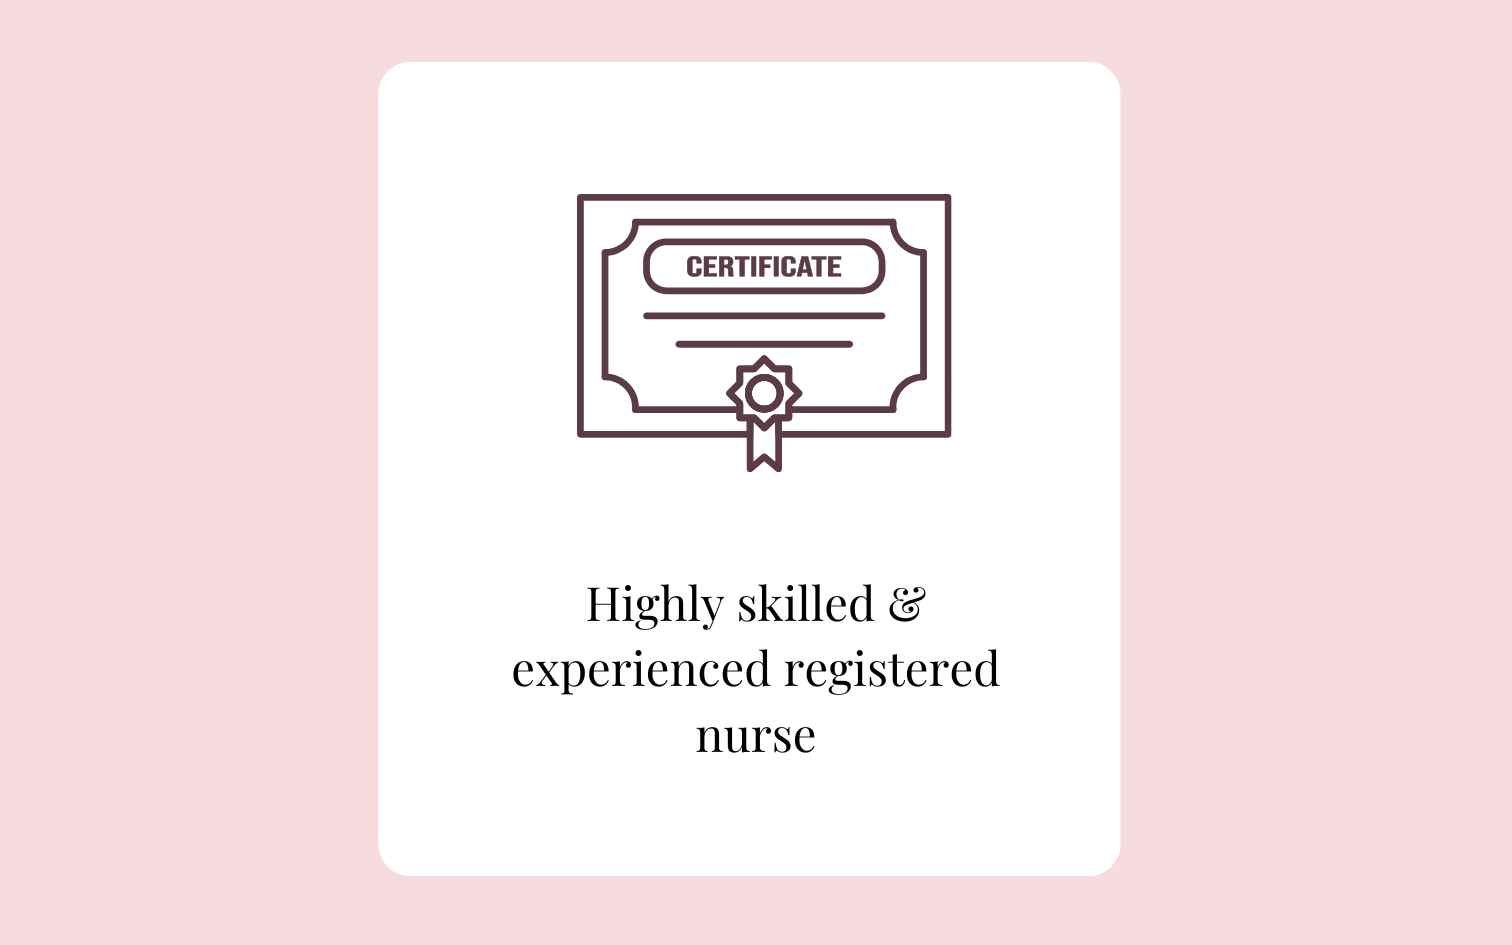 Highly skilled & experienced registered nurse